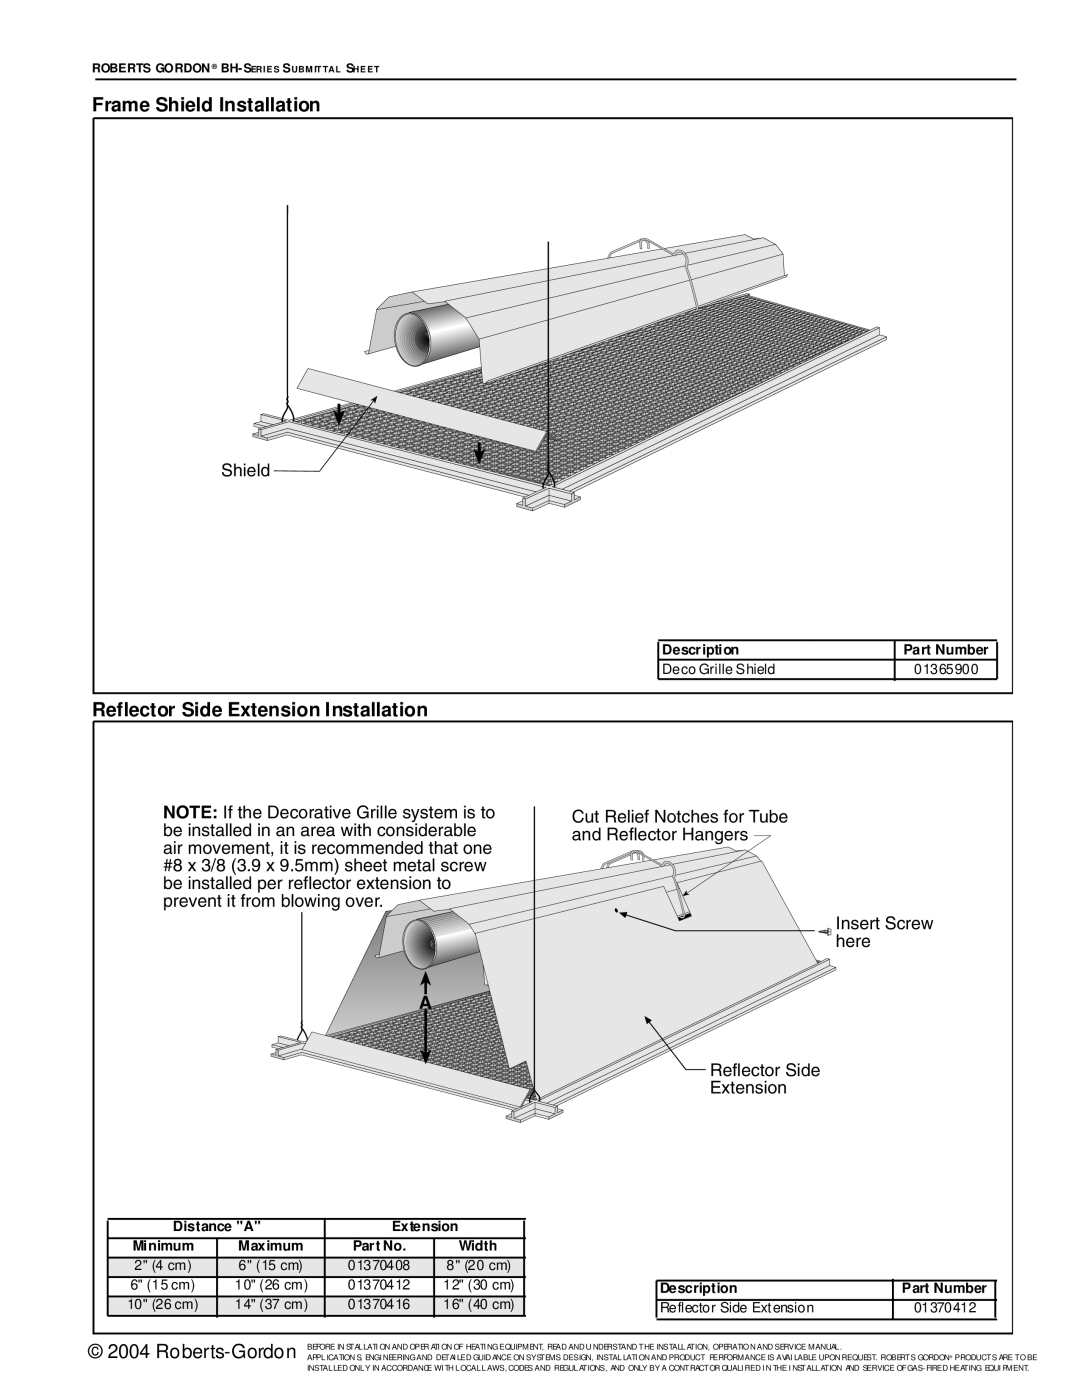 Roberts Gorden BH Series Description, Distance A, Part Number, Reflector Side Extension, 01370412, Minimum, Maximum 